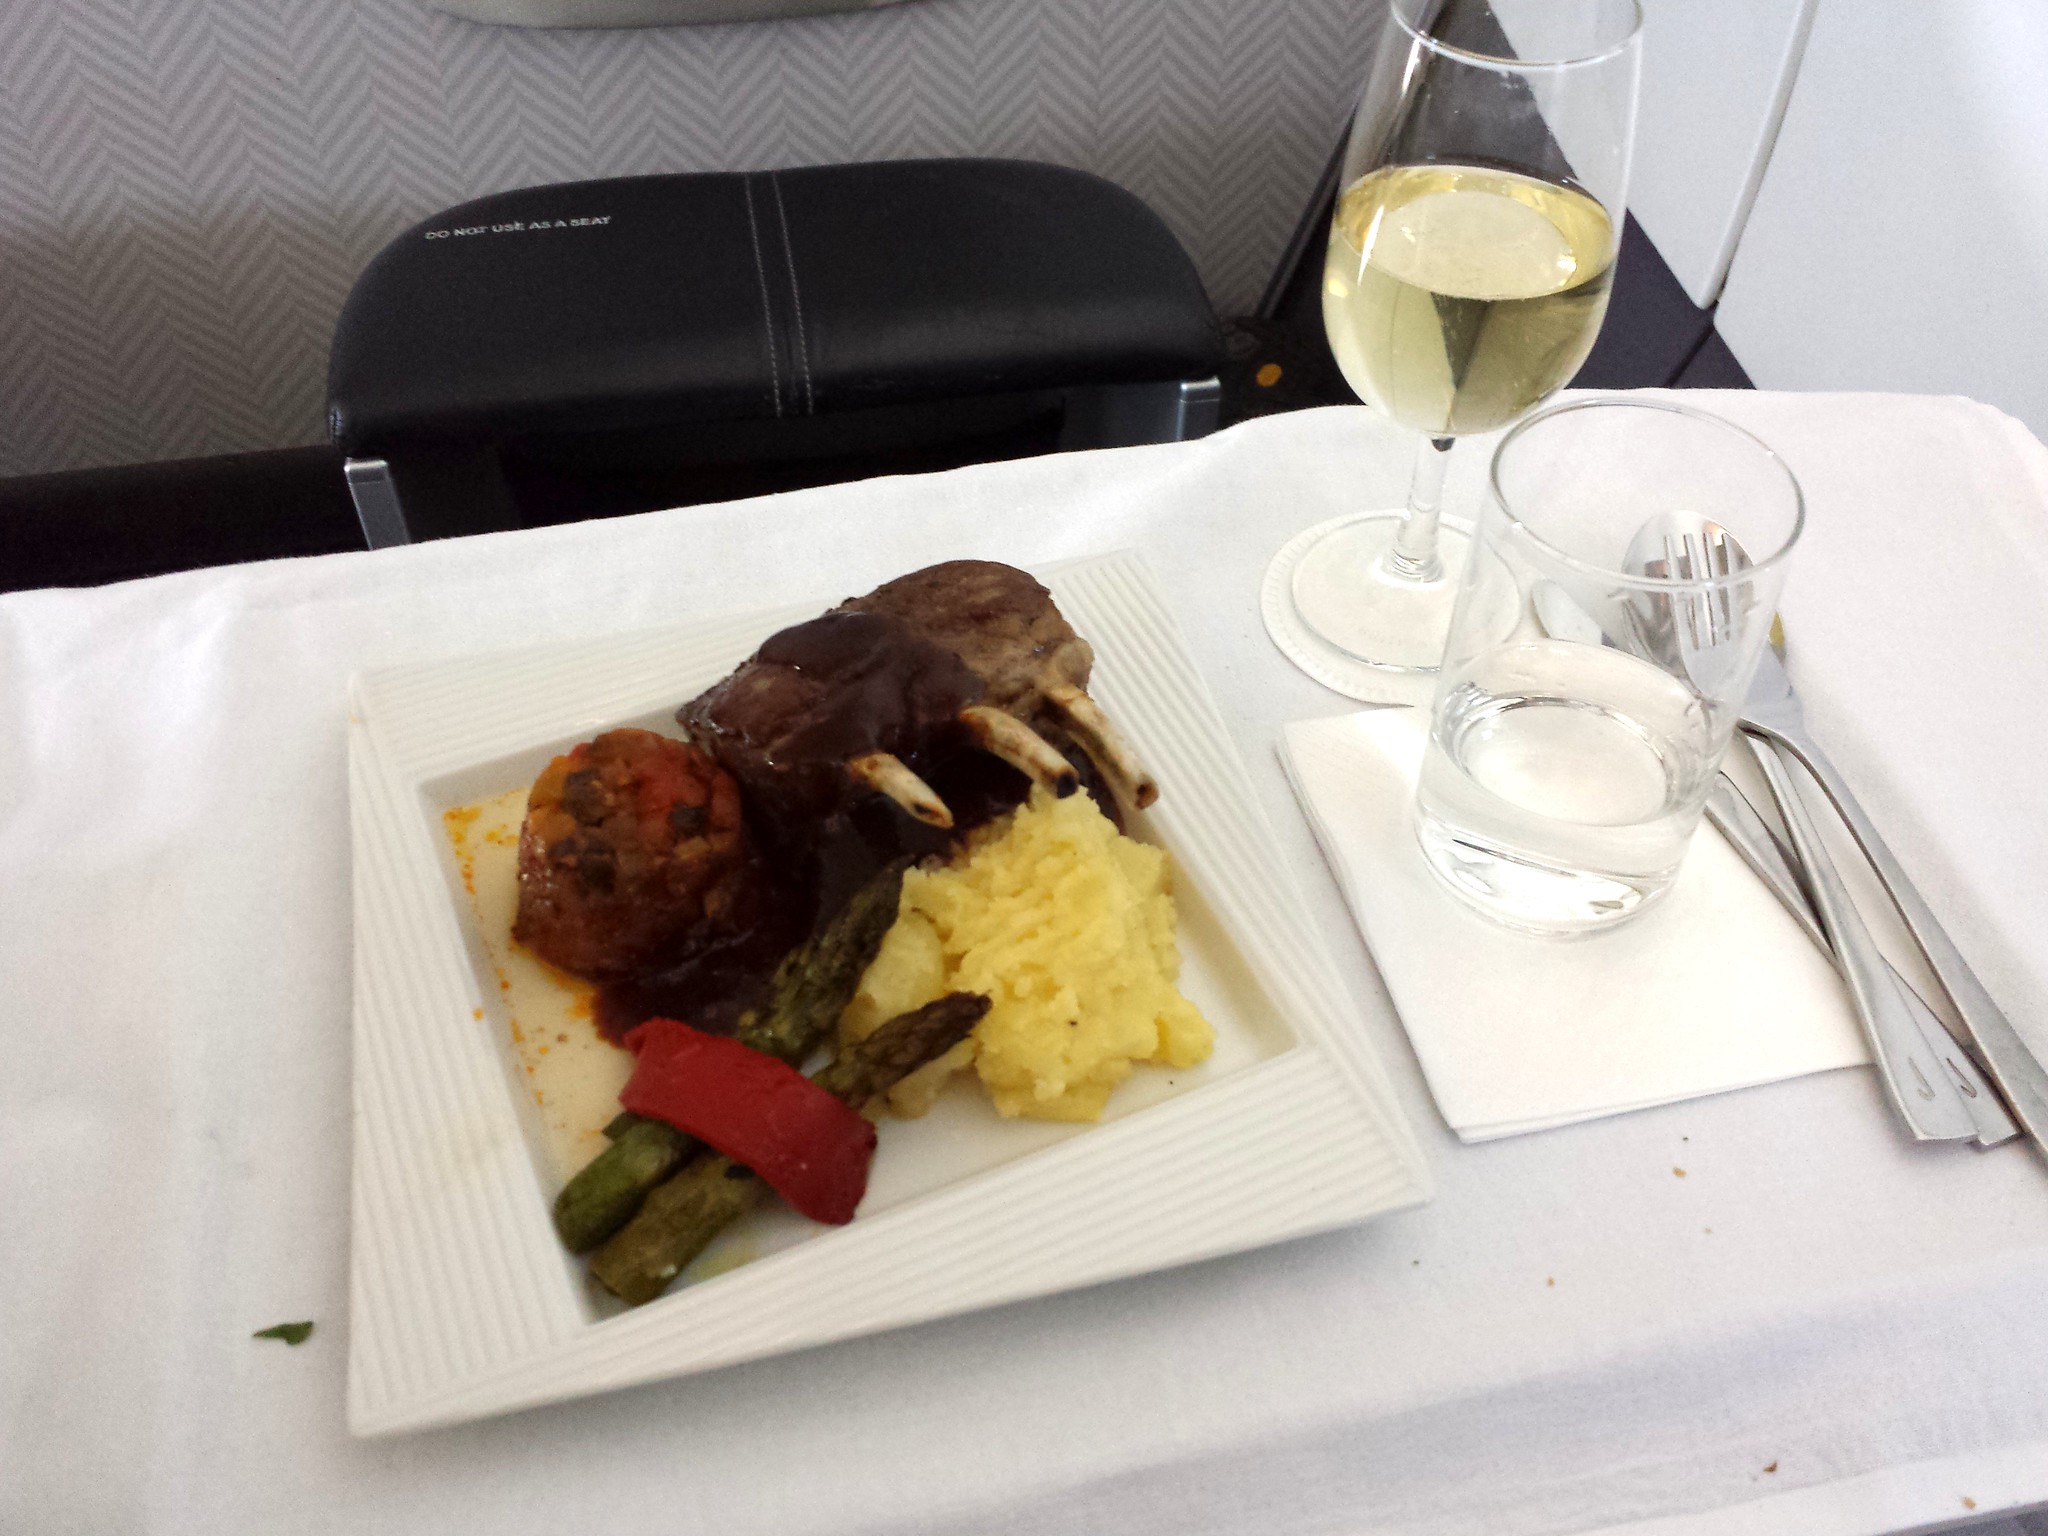 New Zealand lamb served on board the BA flight to New York JFK